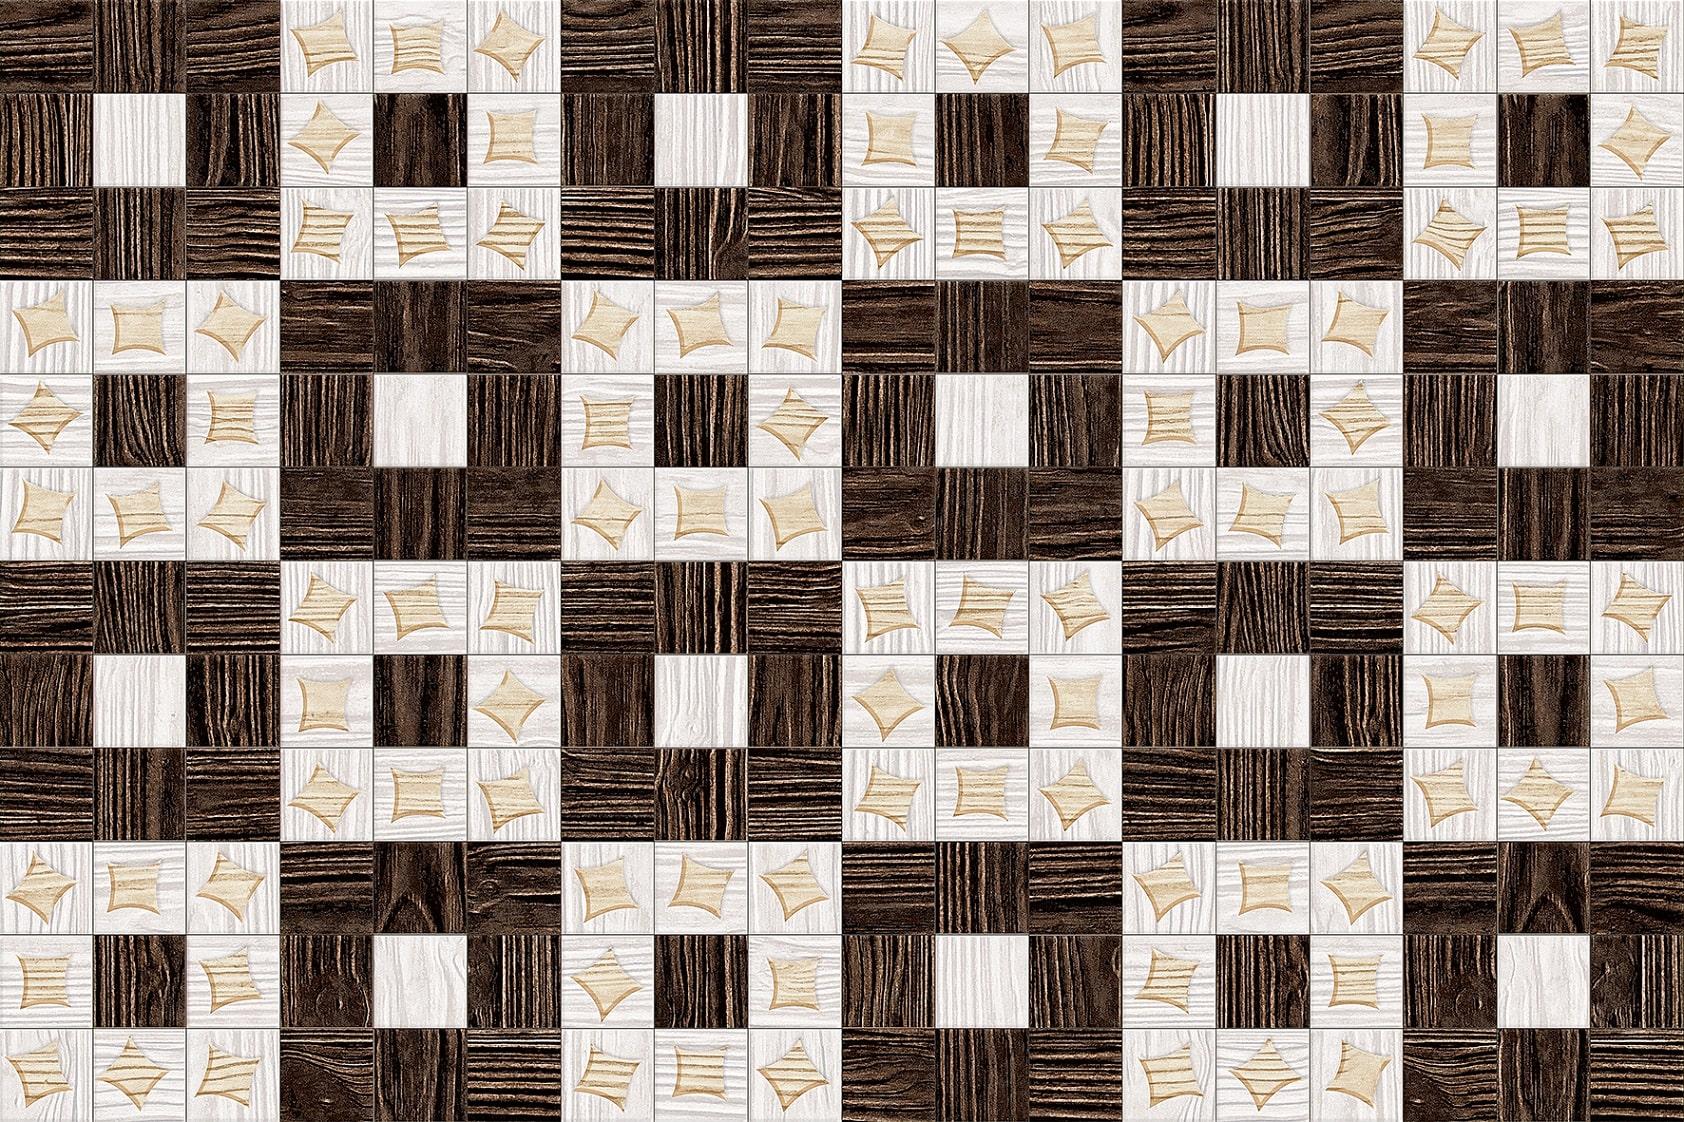 Highlighter Tiles for Bathroom Tiles, Kitchen Tiles, Accent Tiles